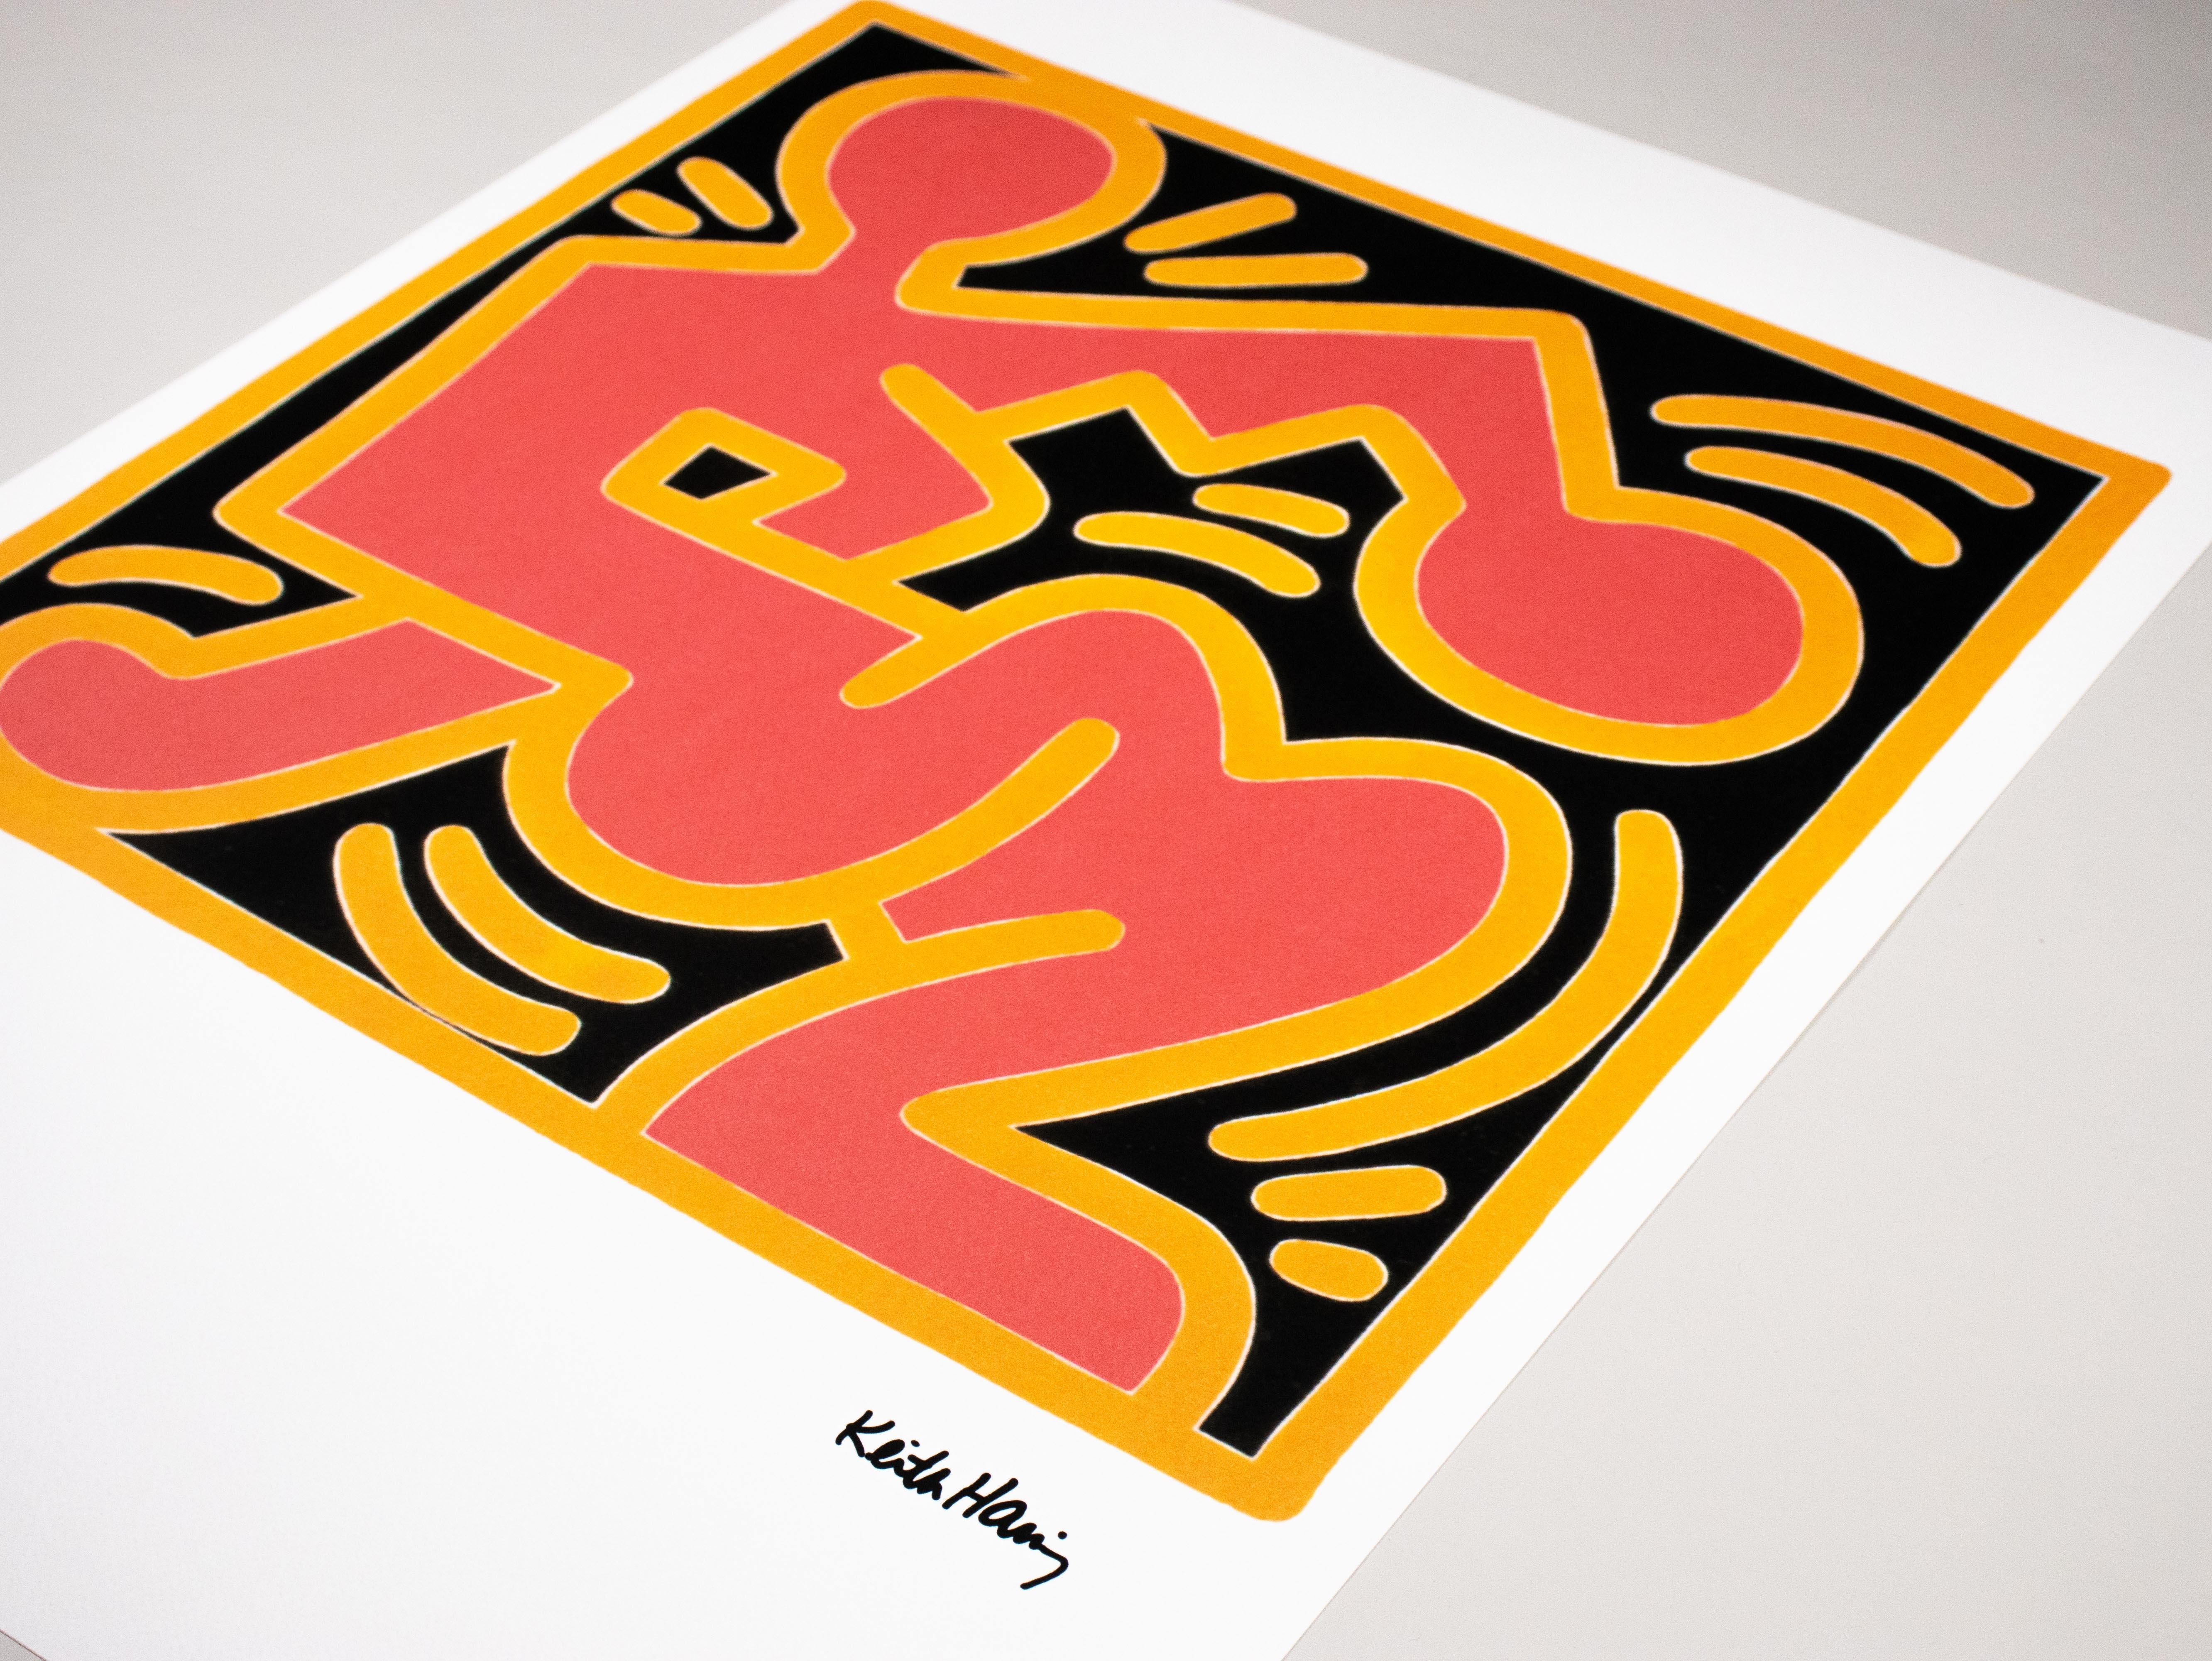 Lithographie – limitierte Auflage 15/150 Exemplare – Keith Haring Foundation Inc. im Angebot 5